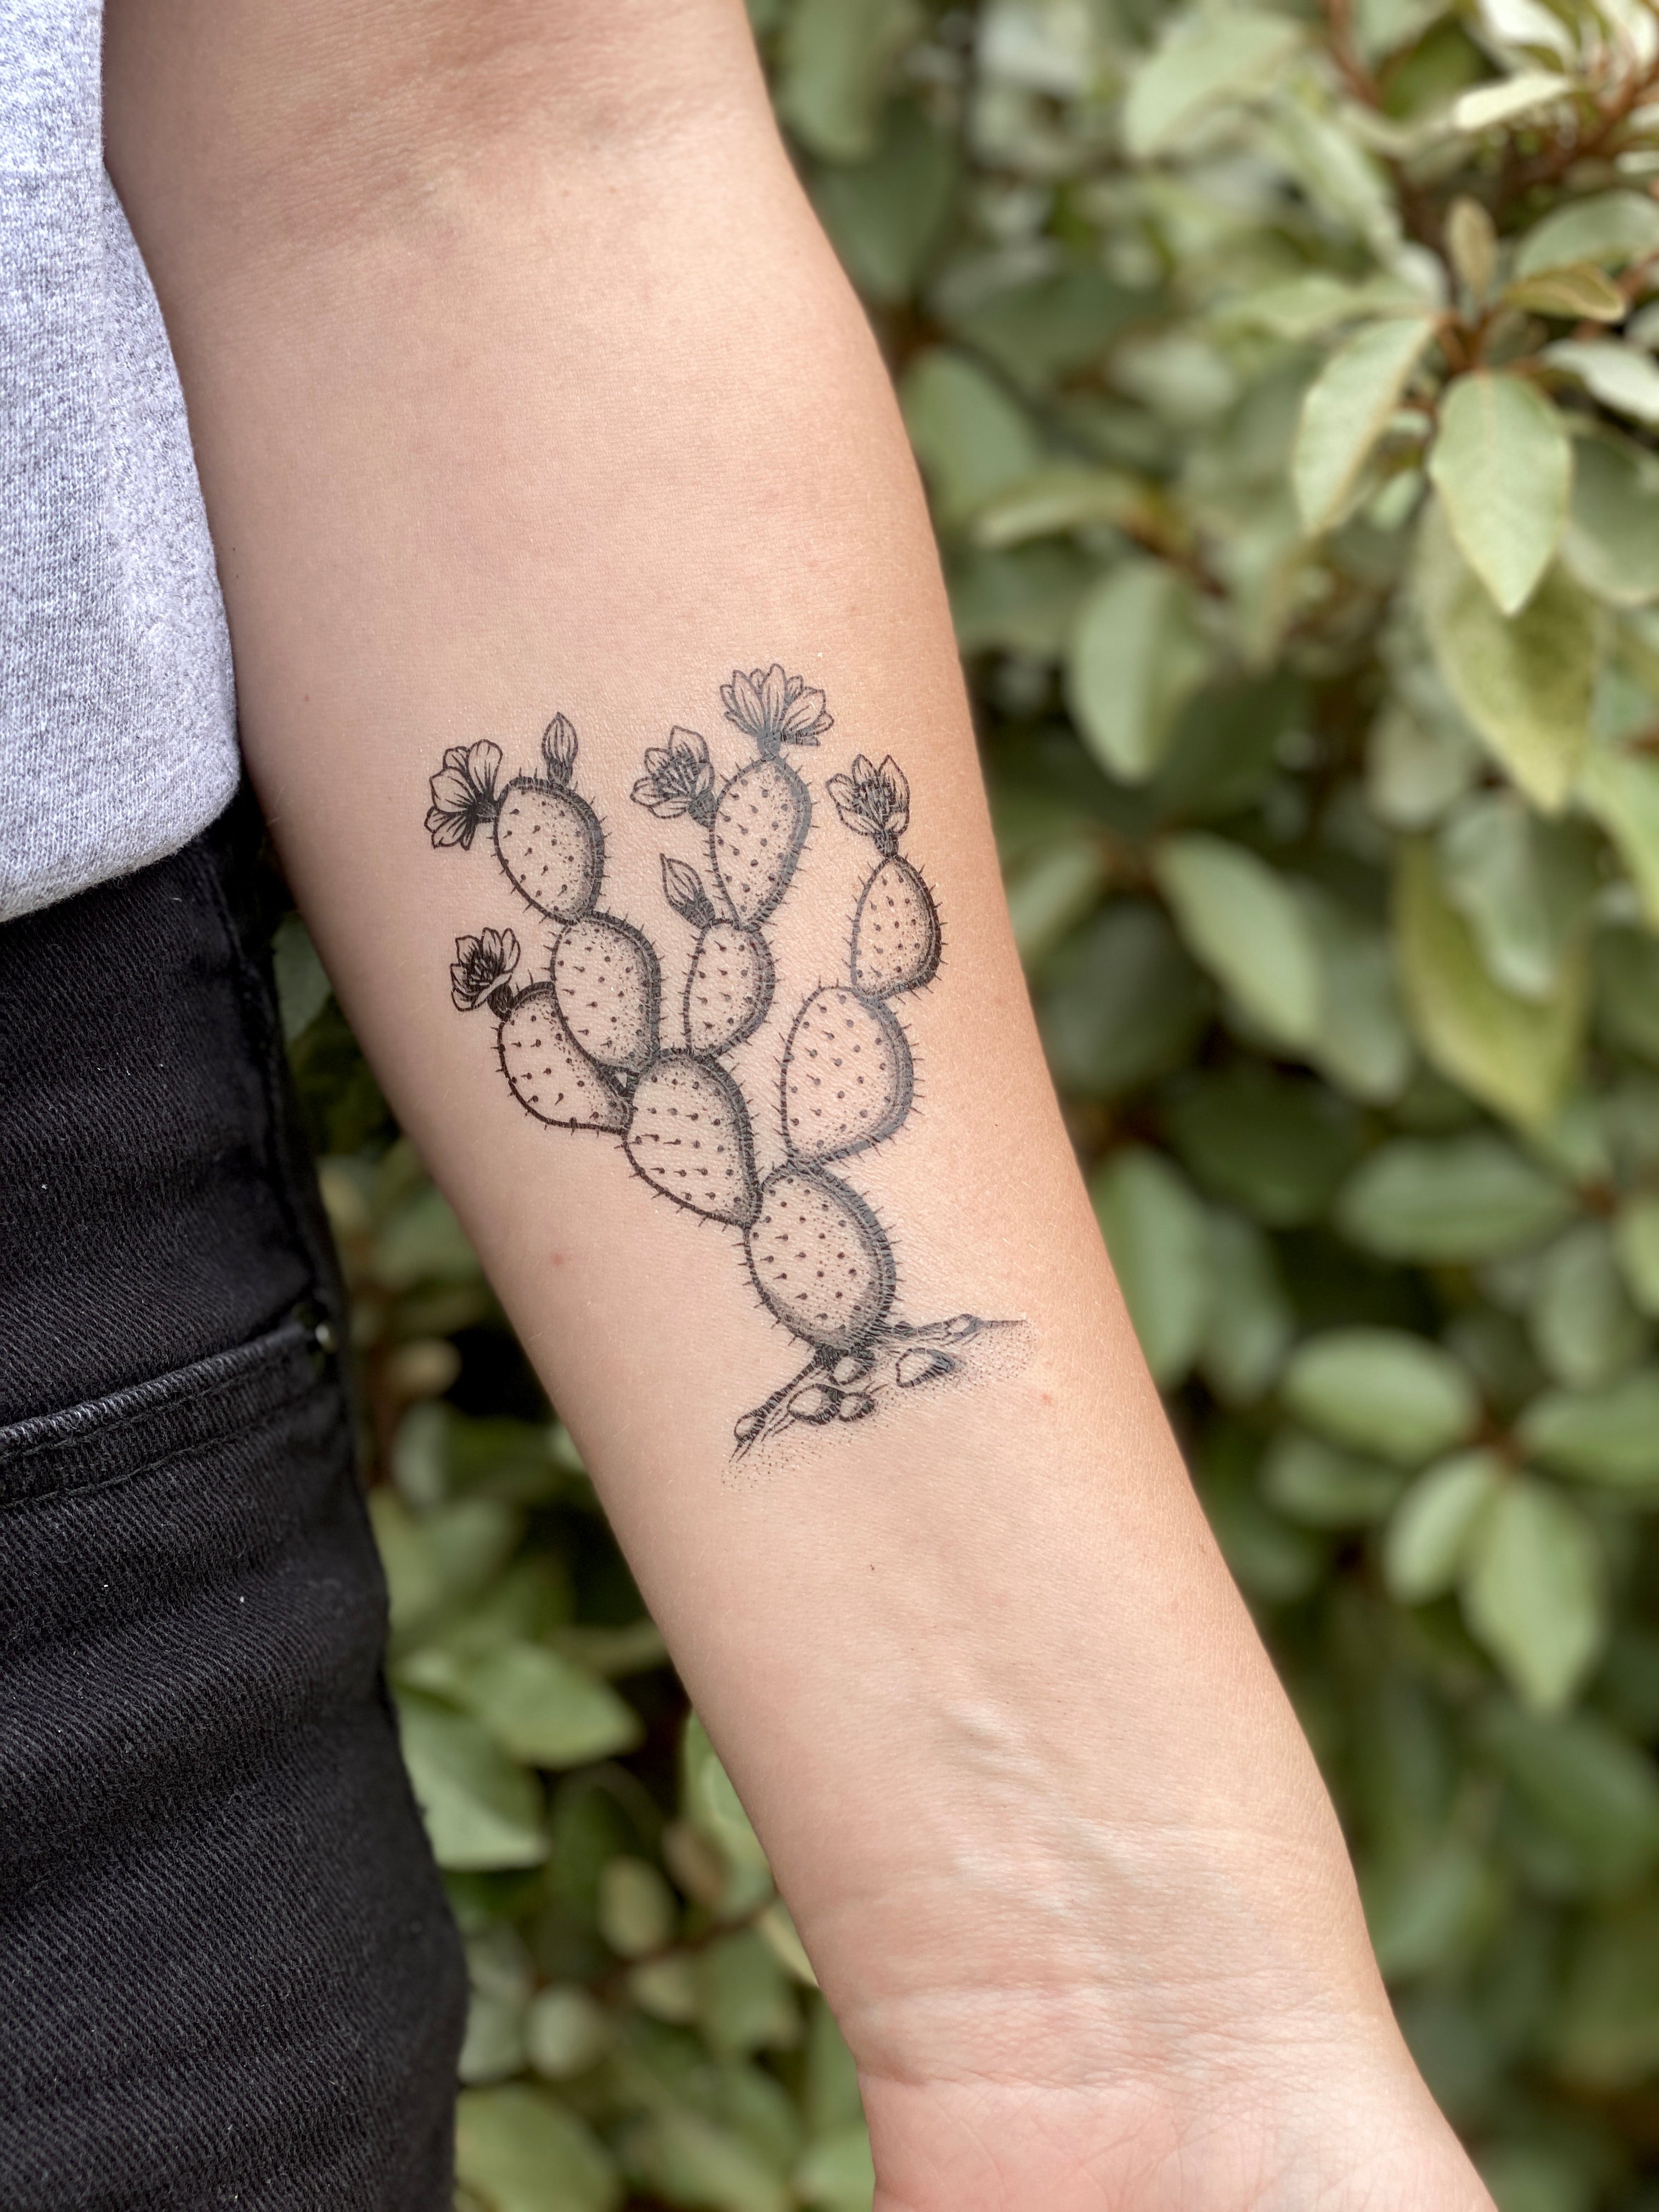 Stippledot shading Prickly Pear by Alex Citrone at Resurrection Tattoo in  Austin Texas  rtattoo